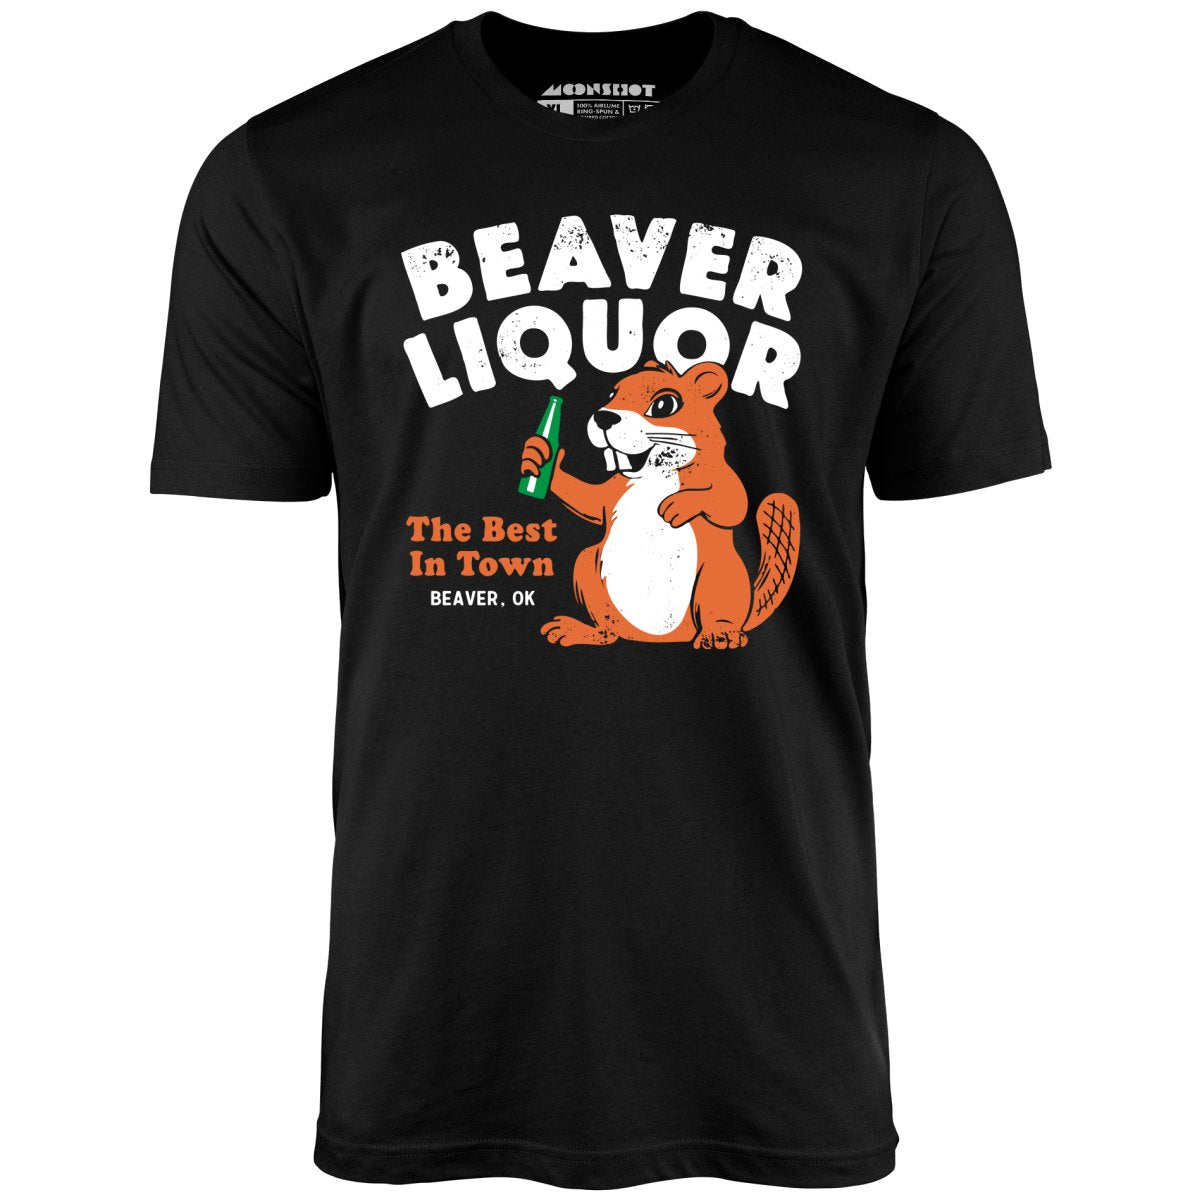 Beaver Liquor - Unisex T-Shirt